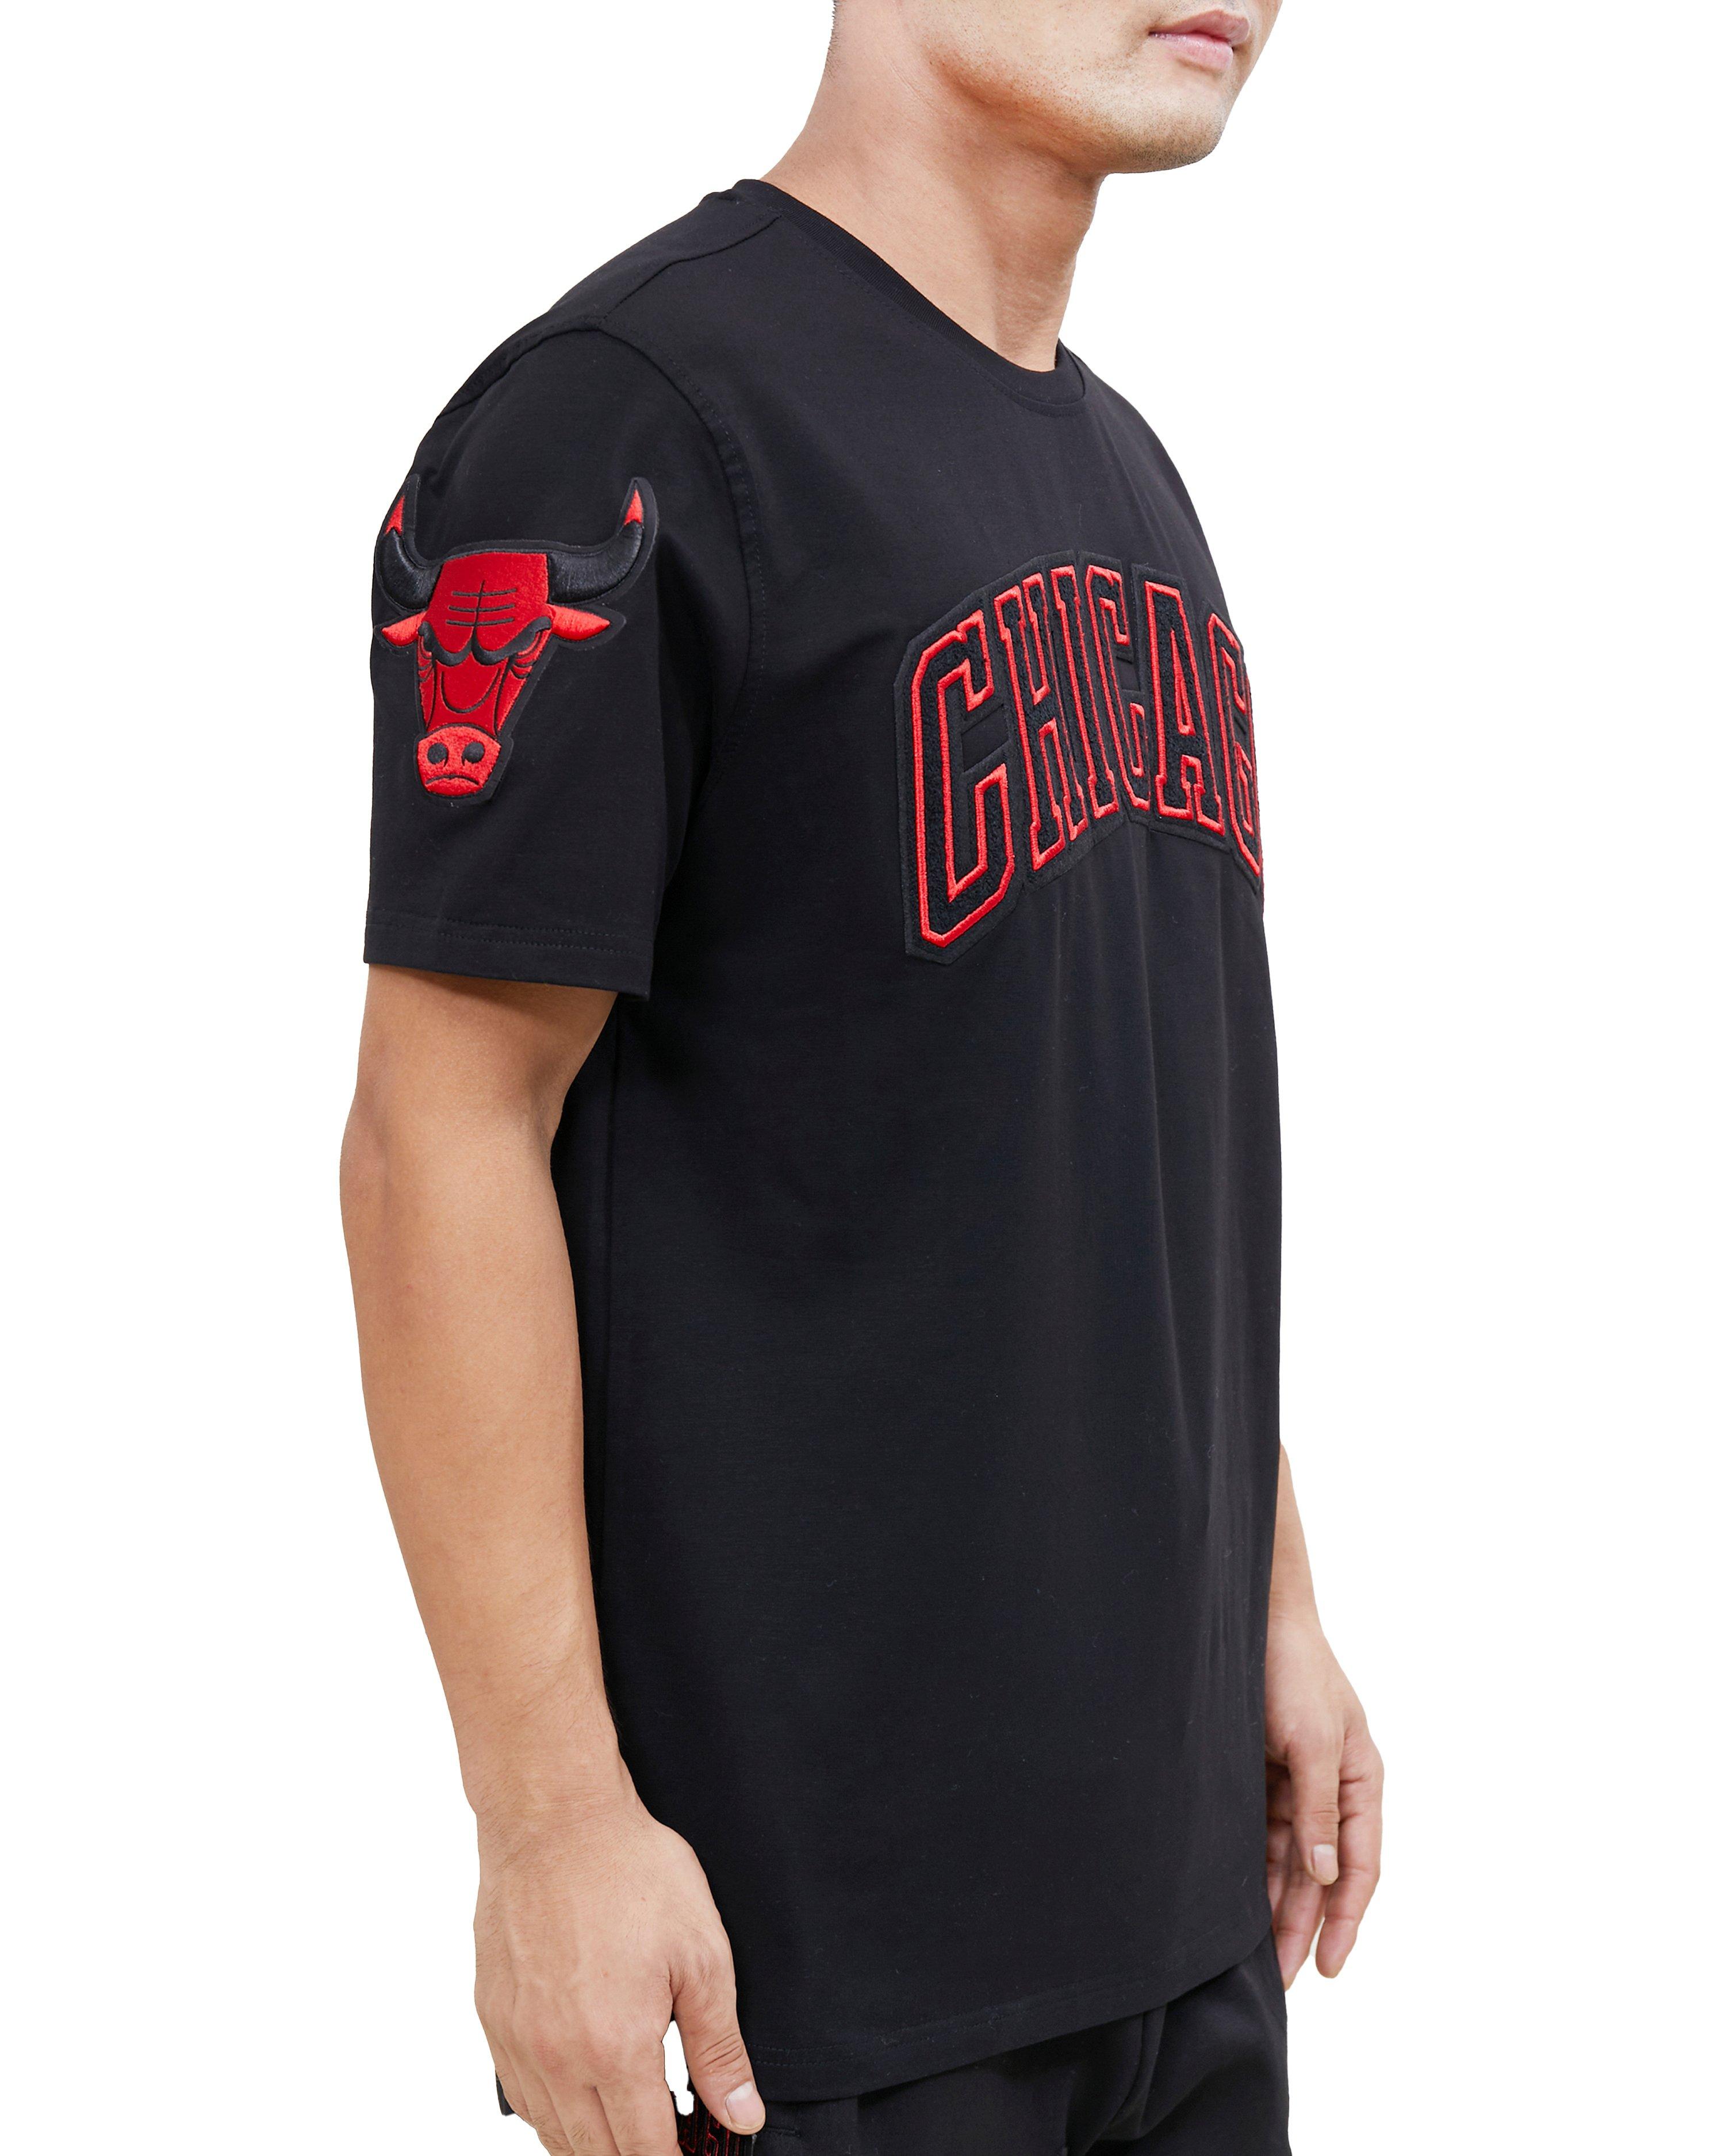 15+ Round Chicago Bulls T Shirt, Printed, Quantity Per Pack: 1